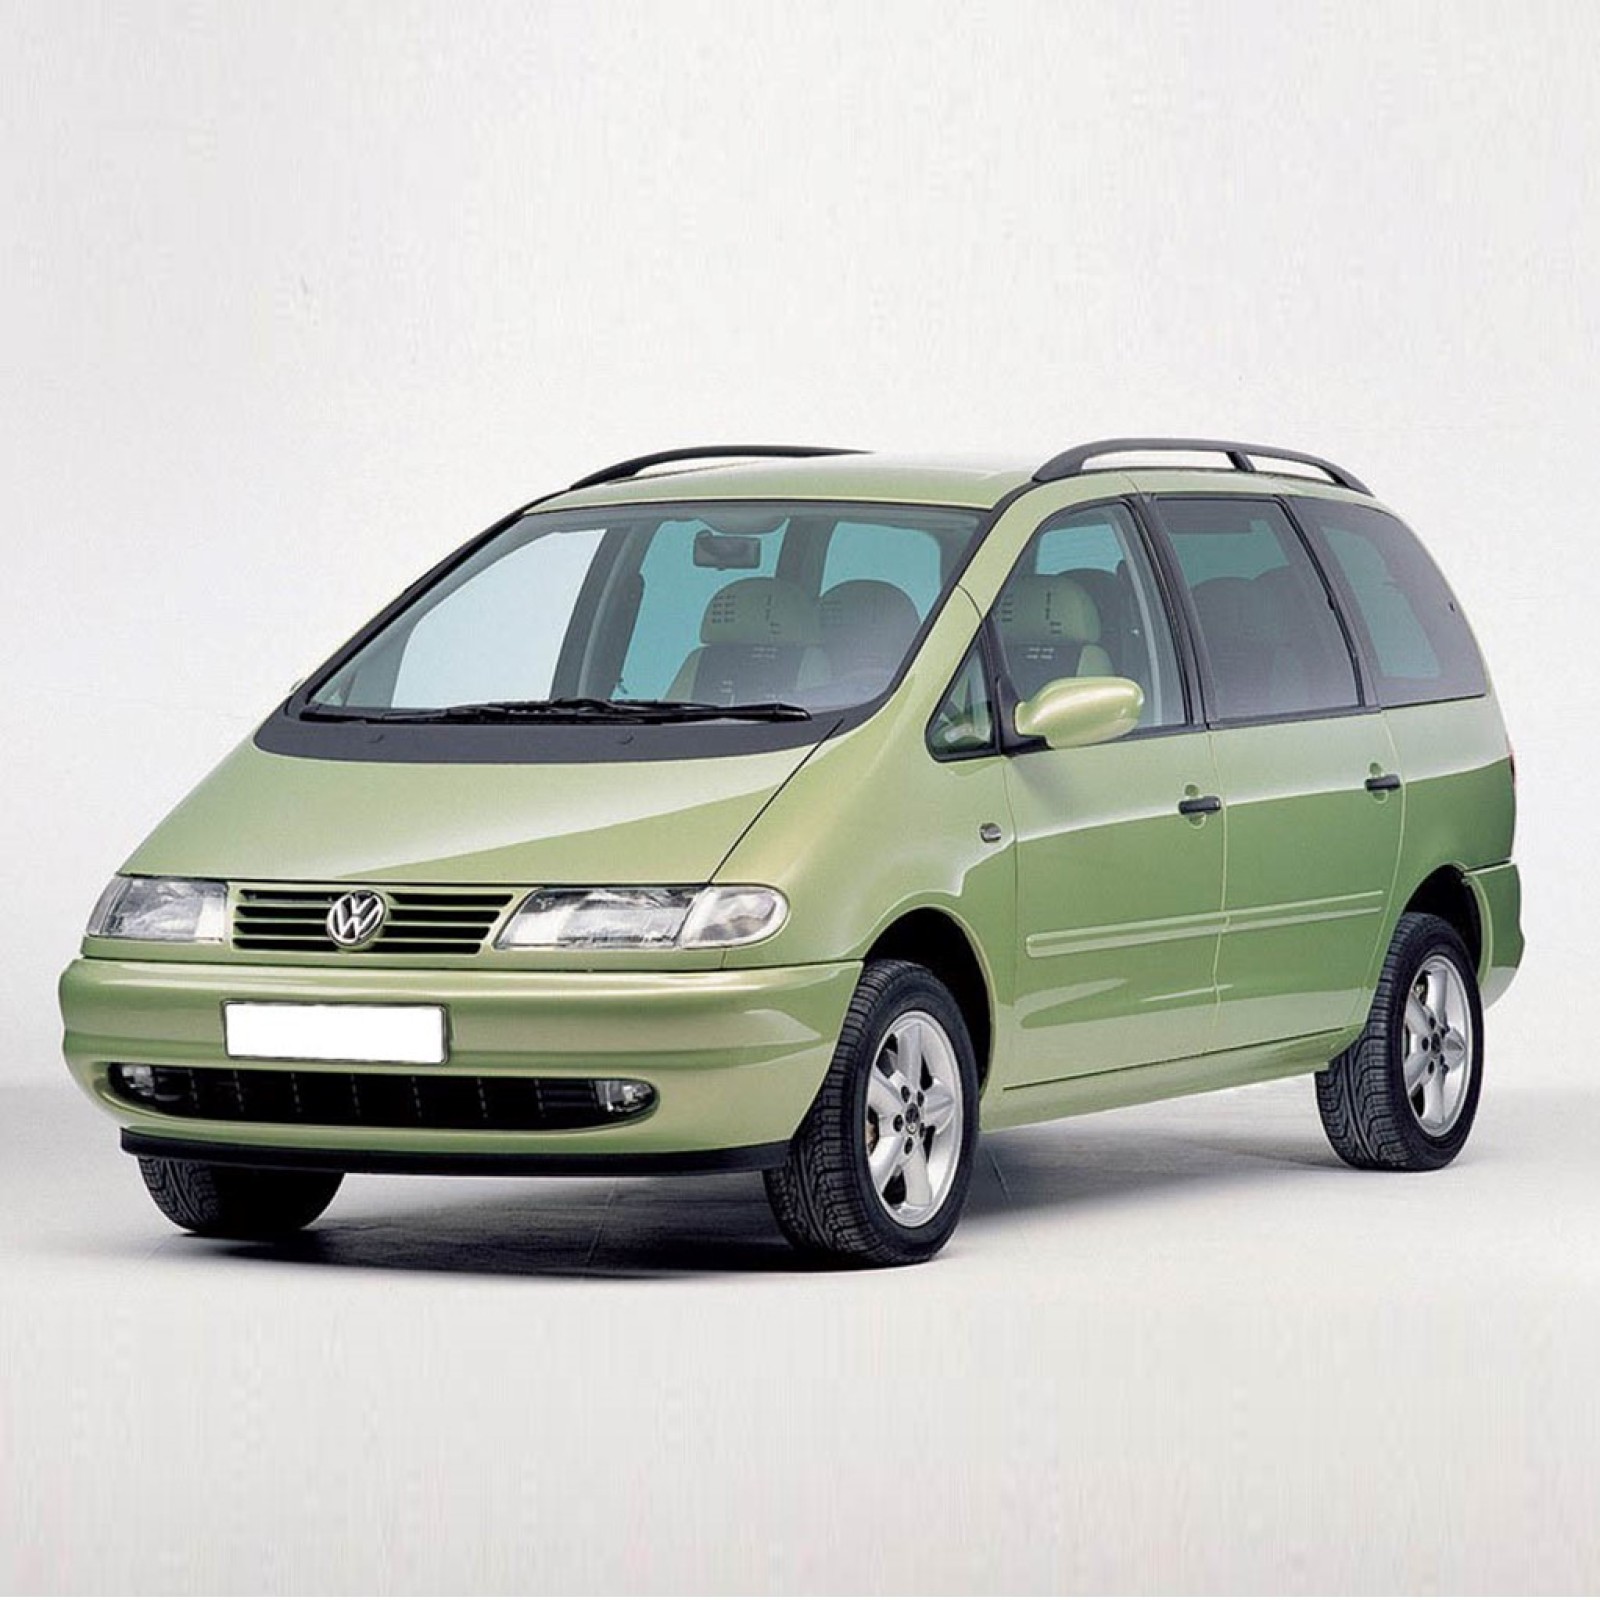 Volkswagen sharan 2000. Sharan 1. Фольксваген Шаран 1995.